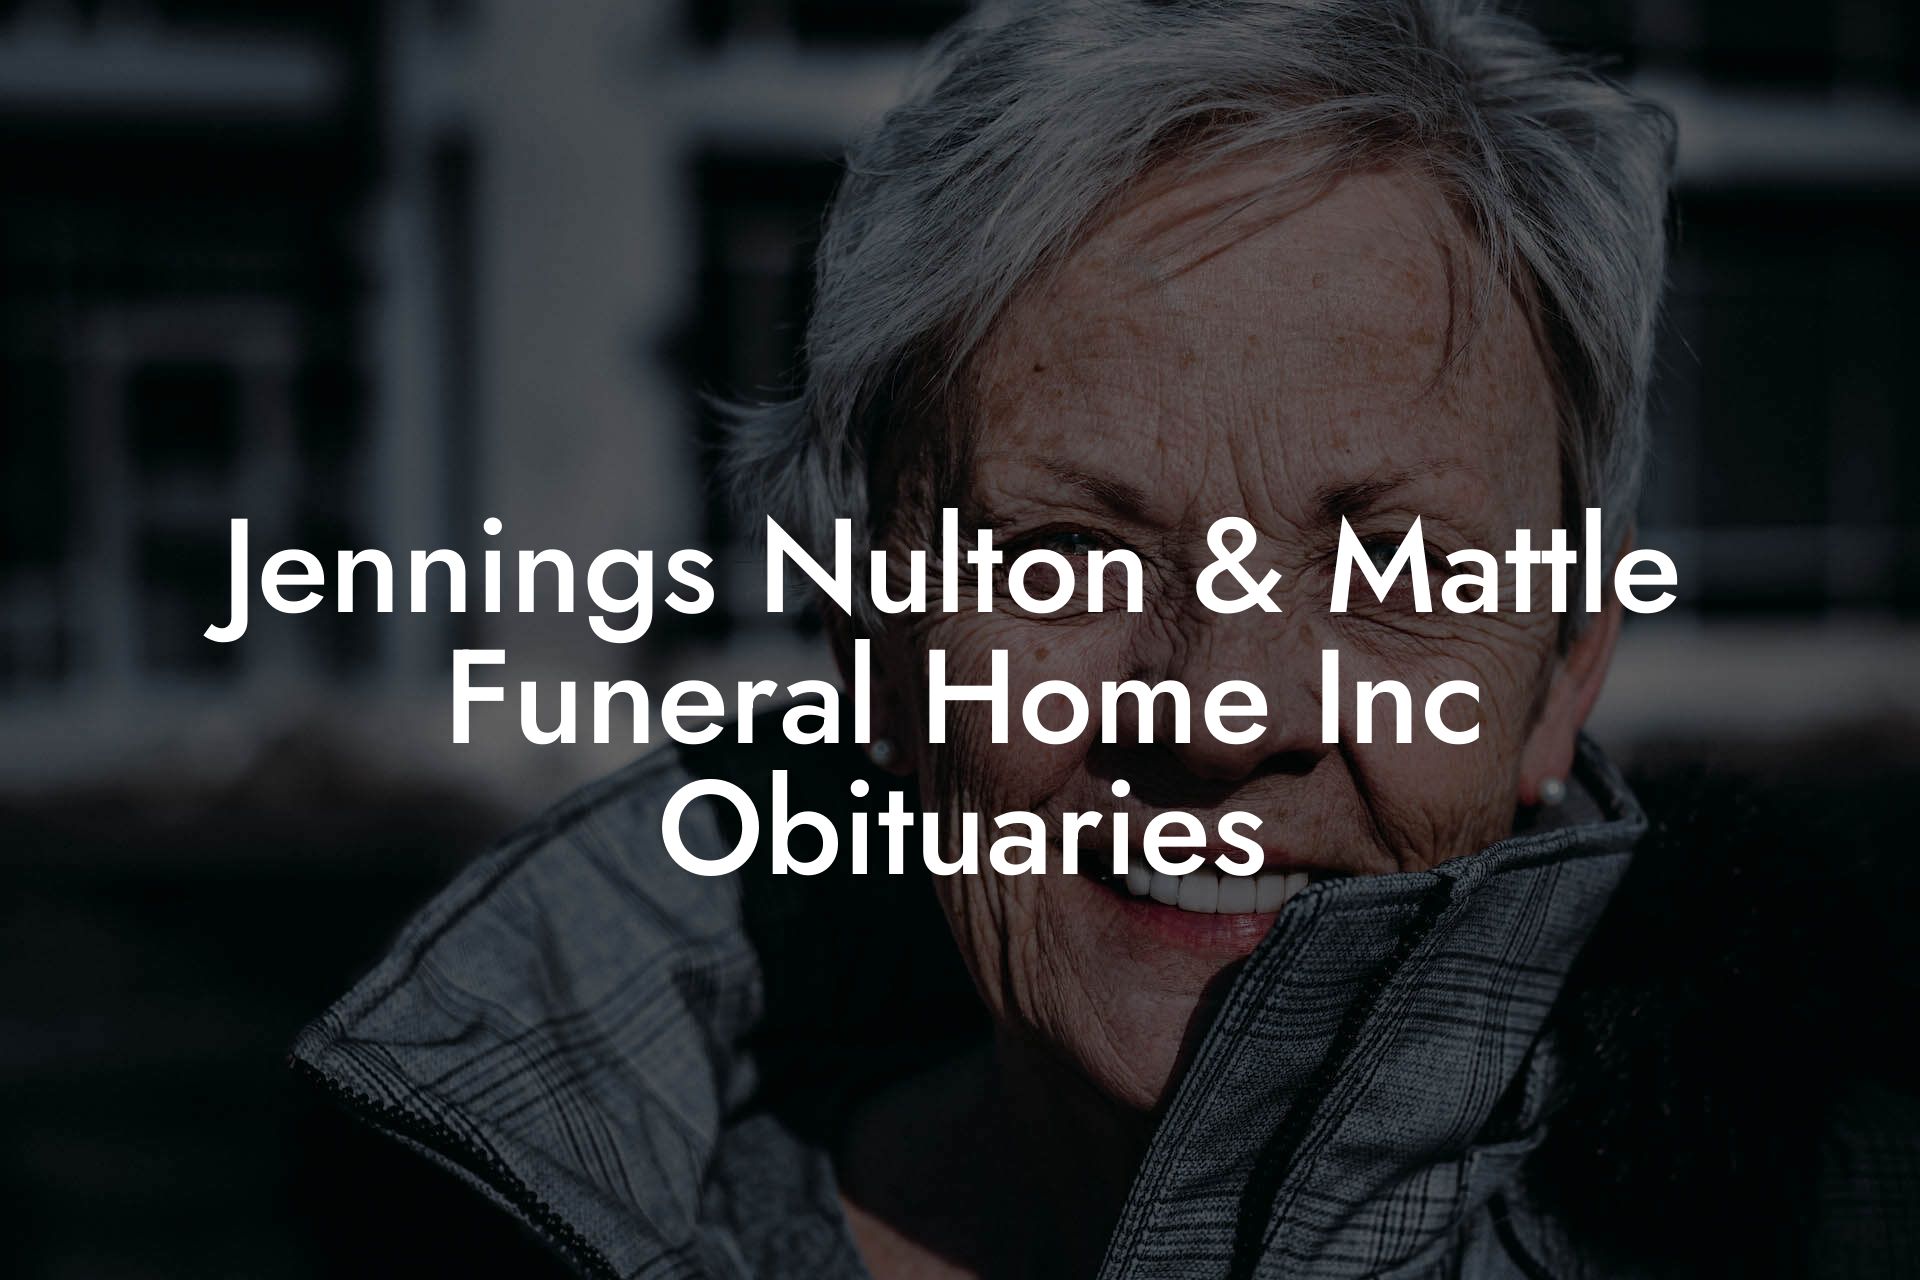 Jennings Nulton & Mattle Funeral Home Inc Obituaries